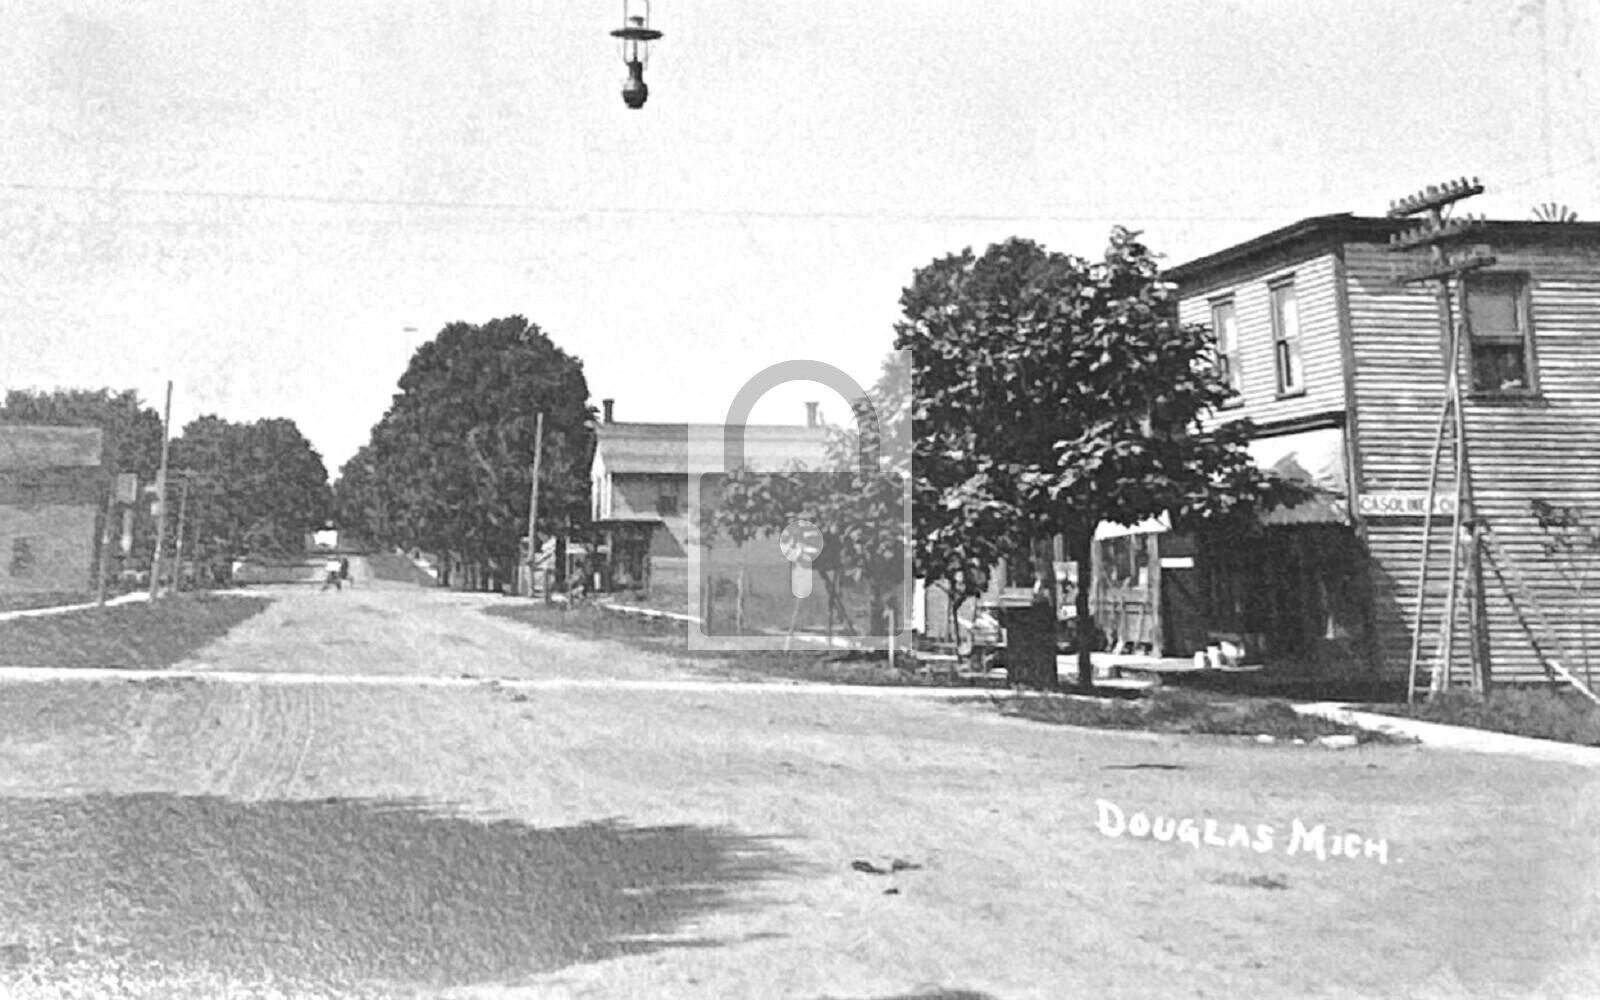 Douglas Michigan MI Street View - 8x10 Reprint